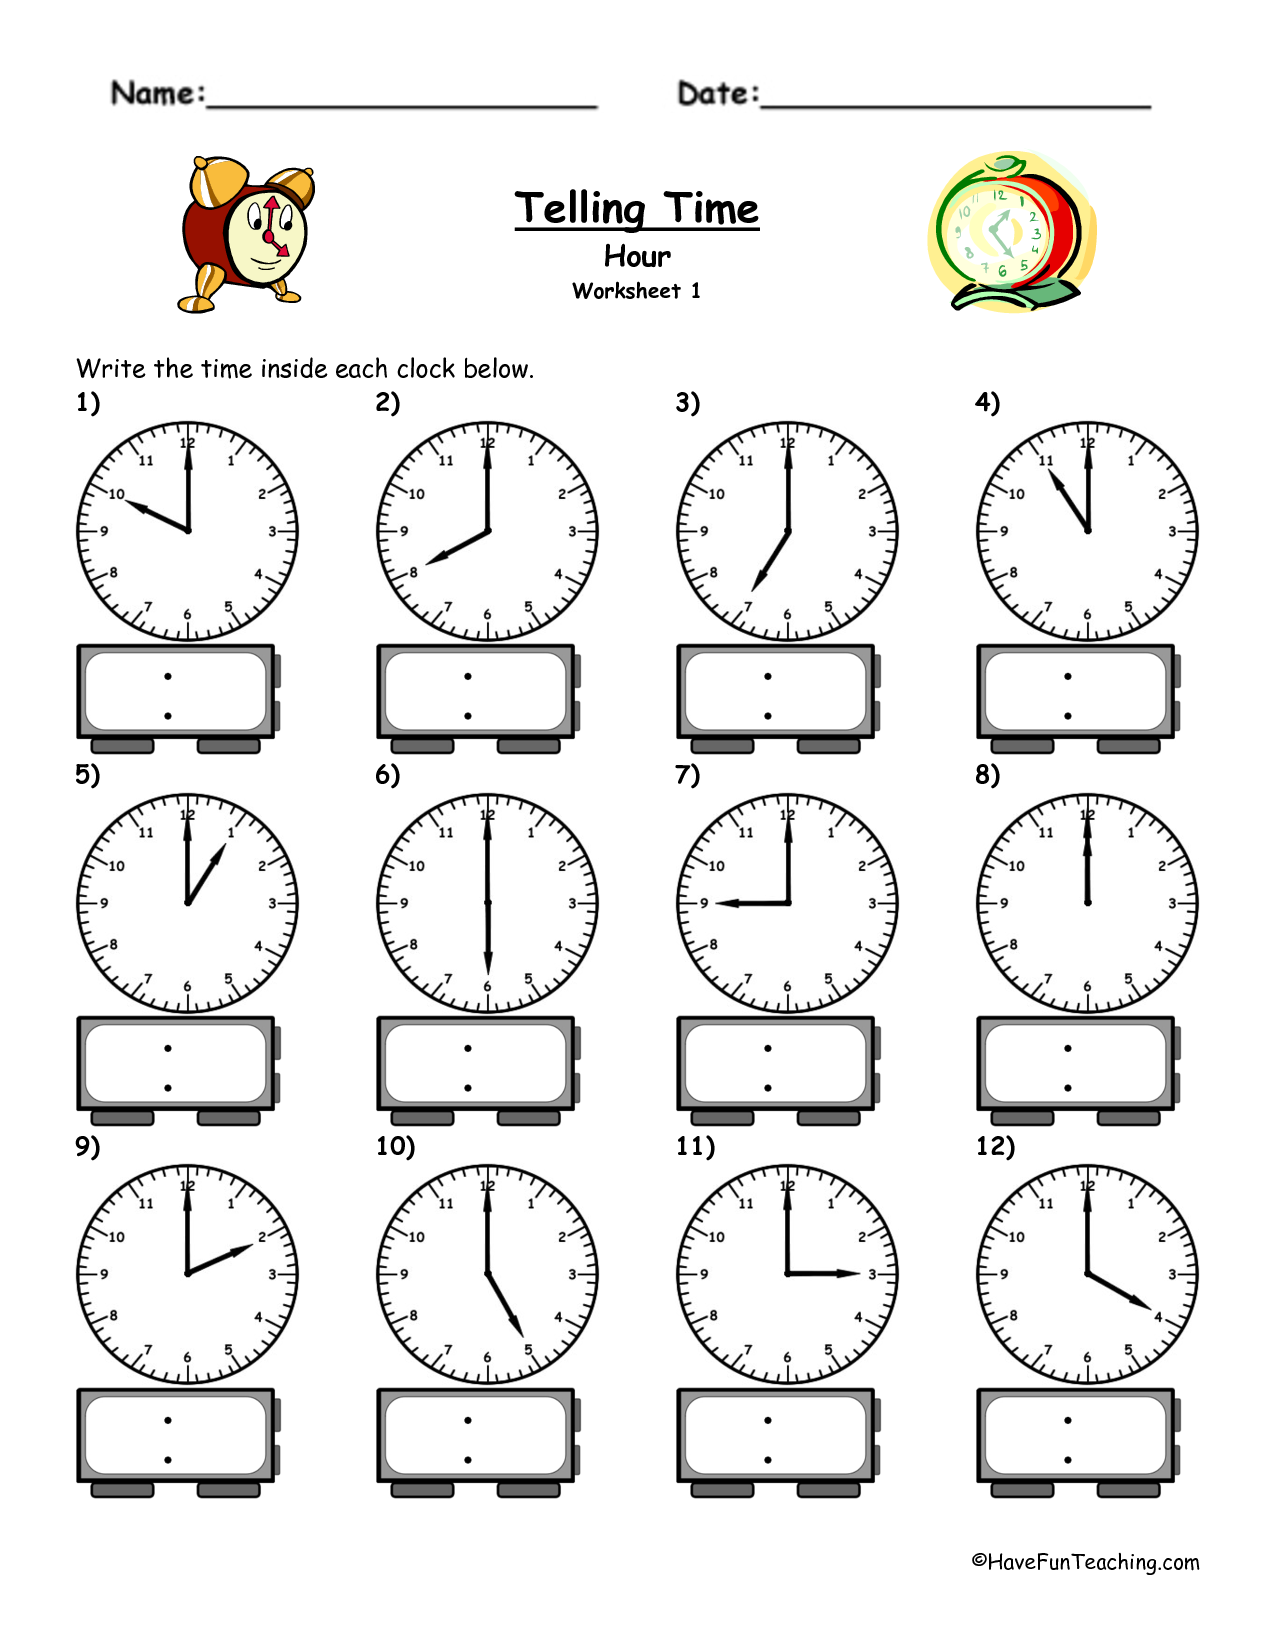 4-best-images-of-printable-clock-worksheet-telling-time-telling-time